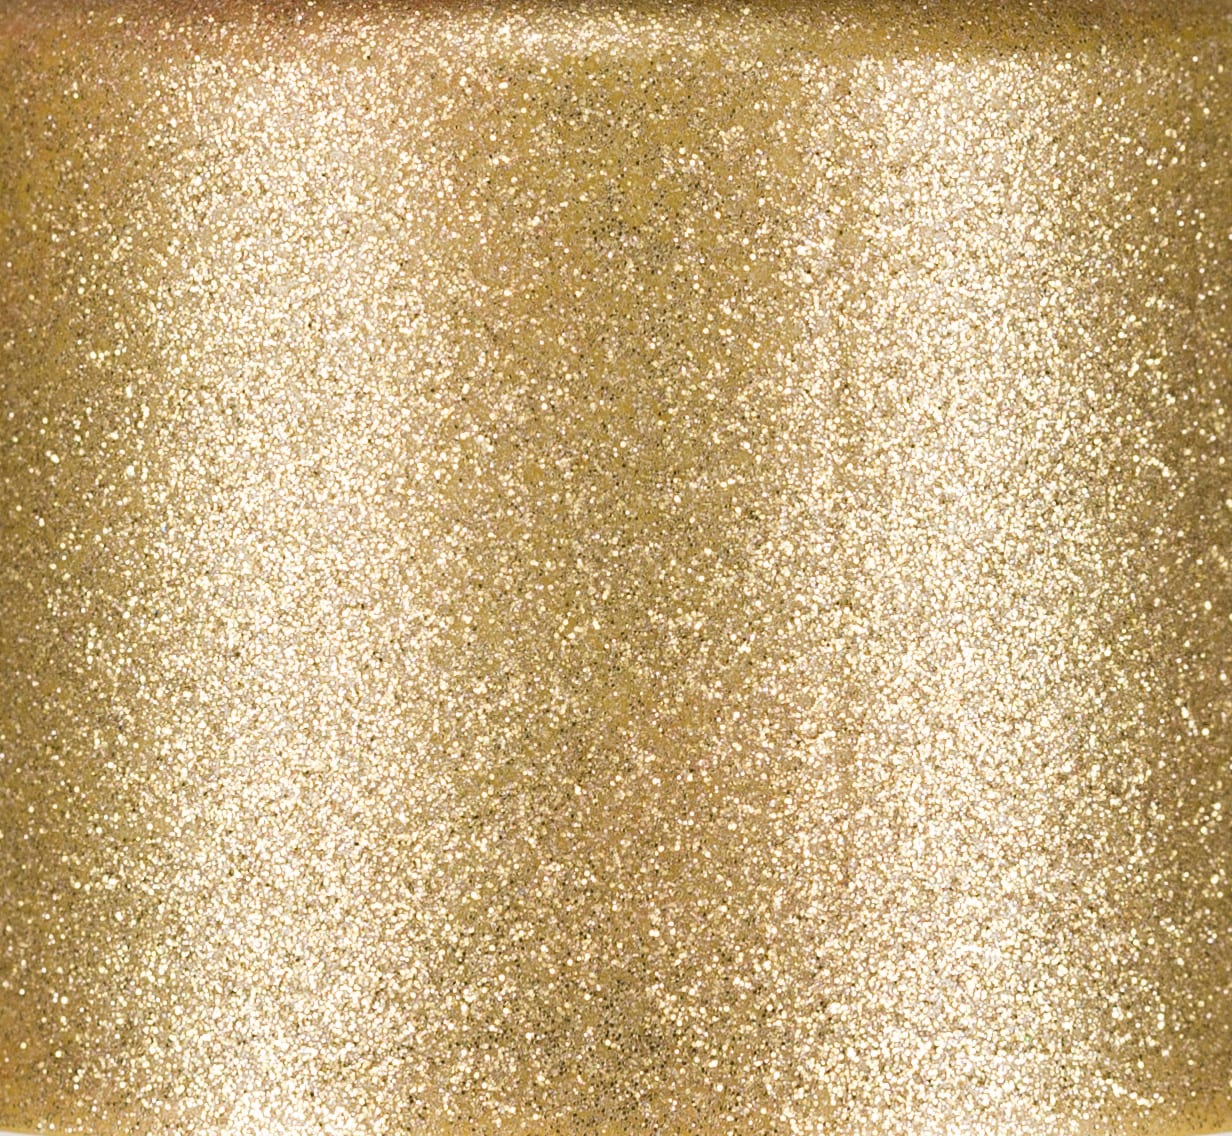 Colorations® Washable Glitter Paint, Gold - 16 oz. Gold Color